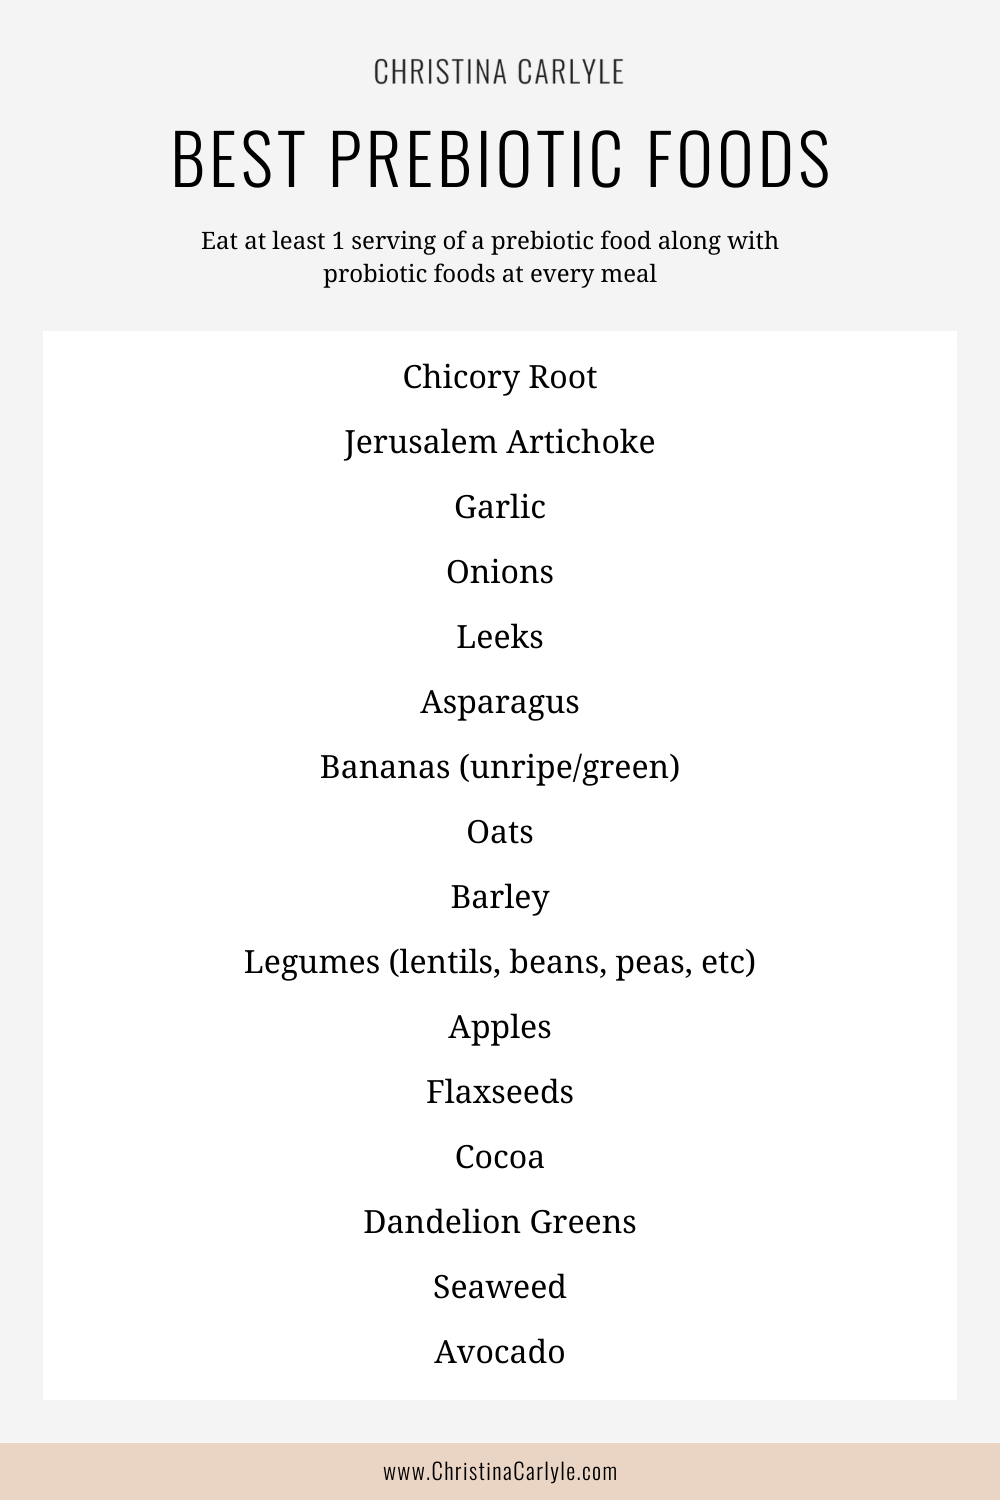 A list of foods highest in prebiotic fibers